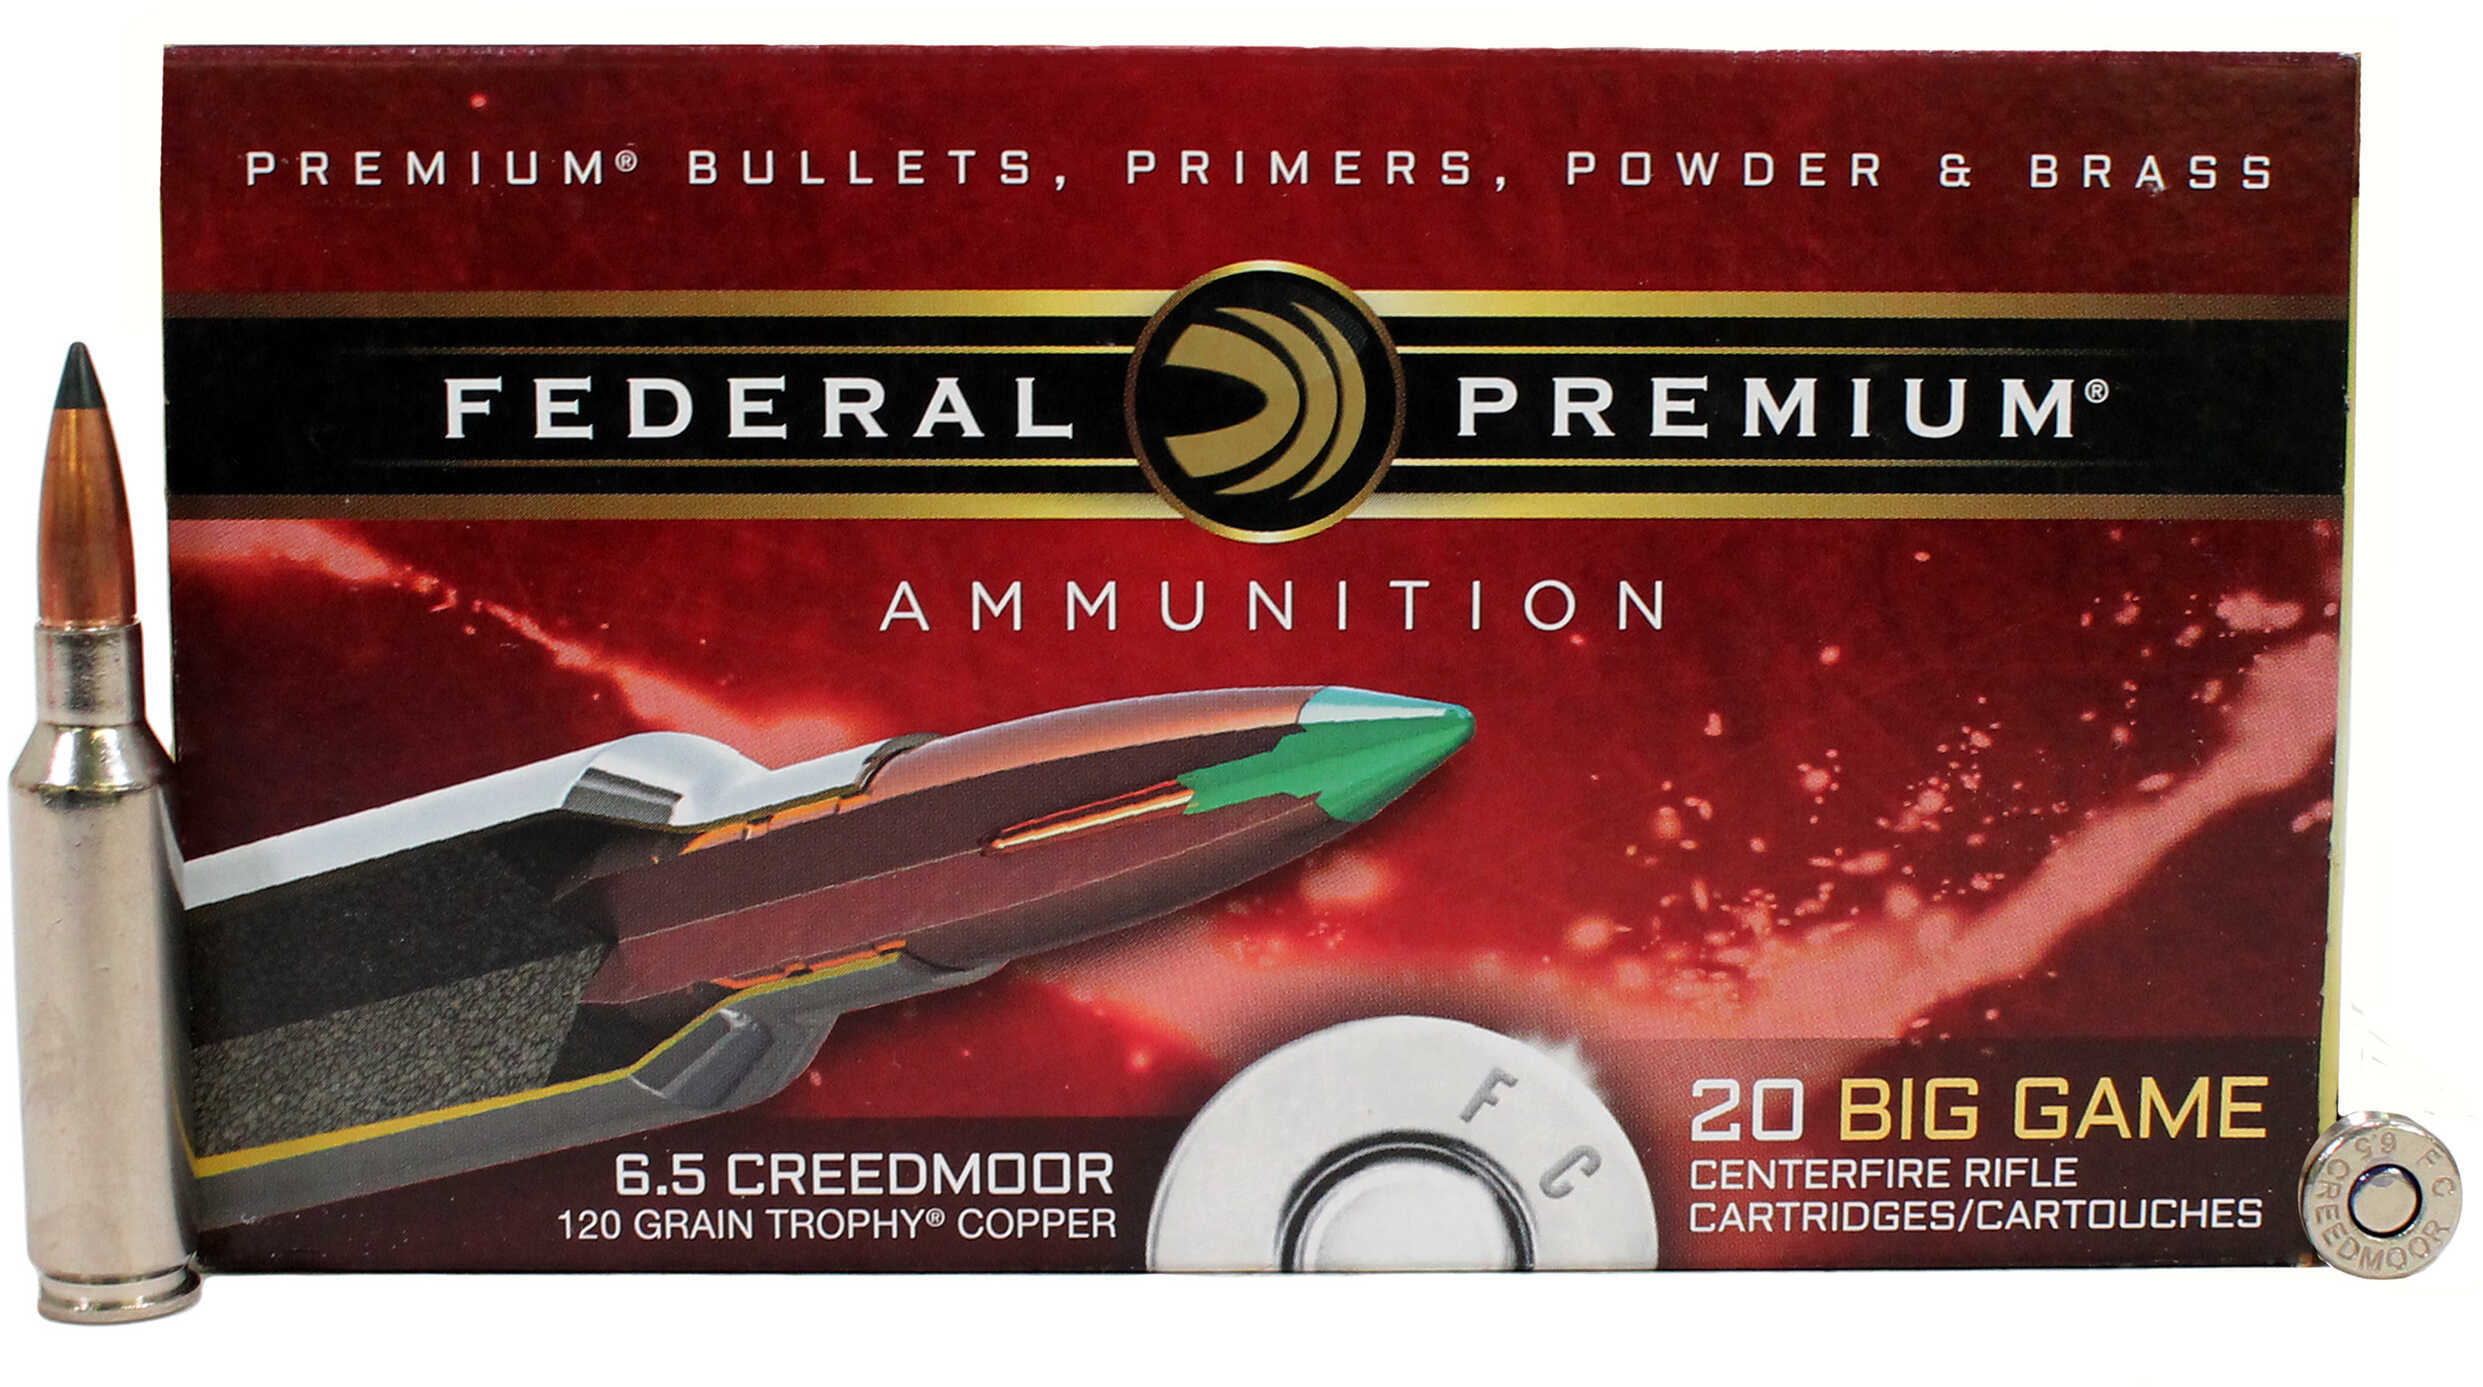 Federal Premium Rifle Ammo 6.5 Creedmoor 120 gr. Trophy Copper 20 rd. Model: P65CRDTC1